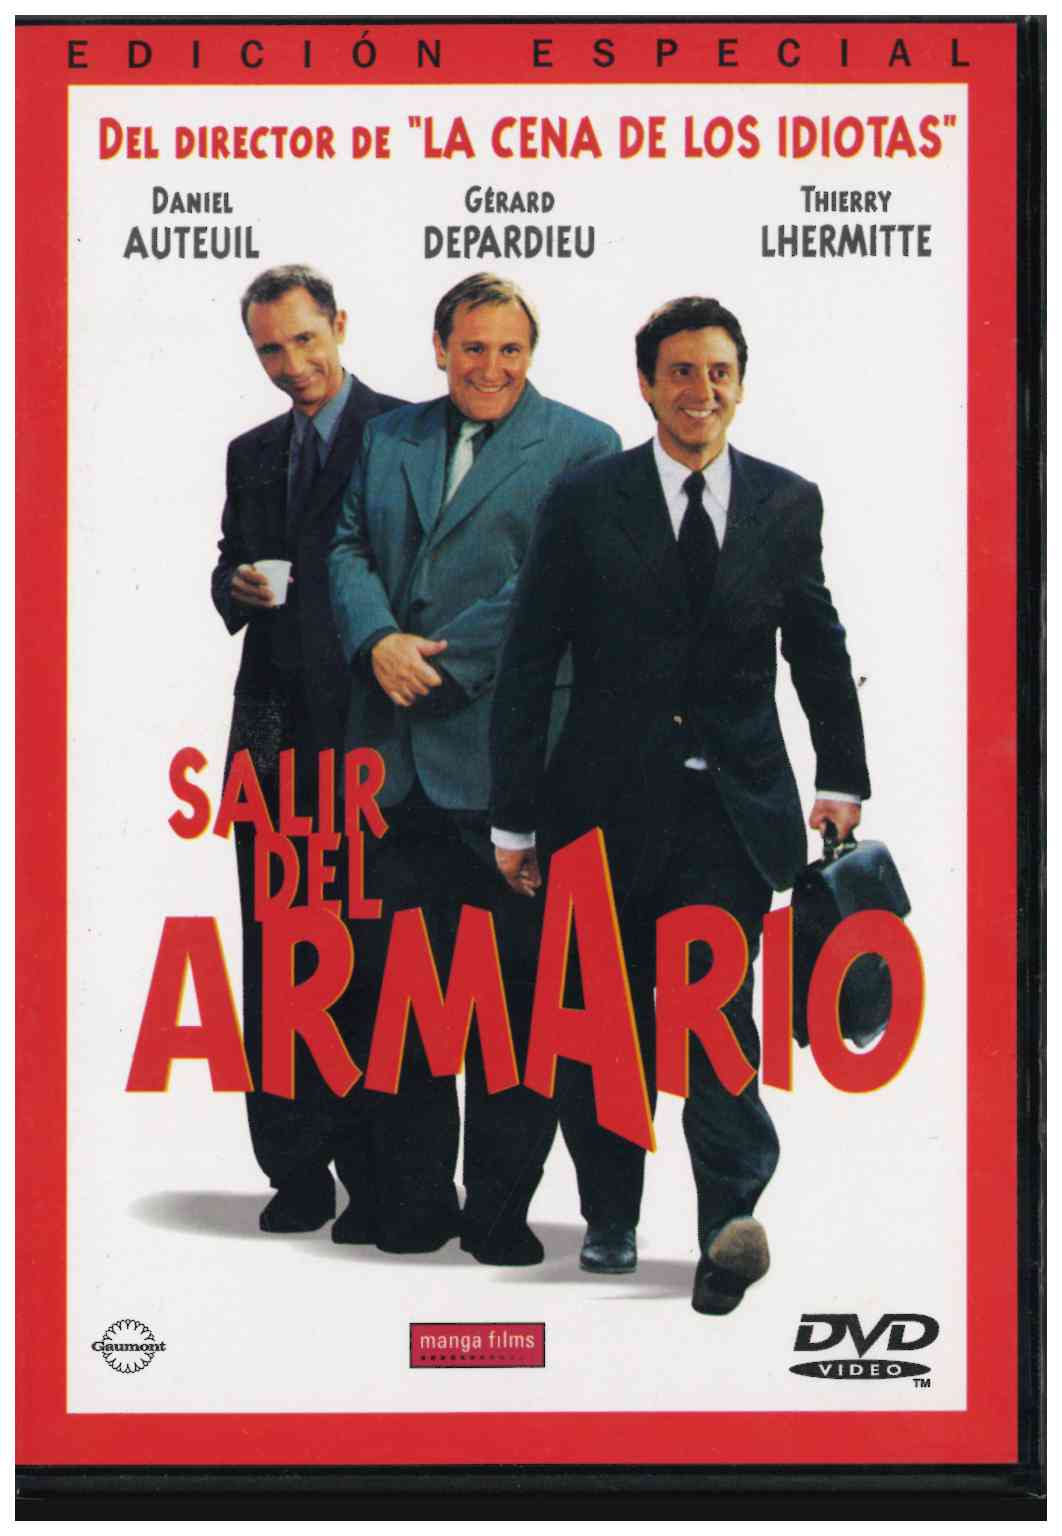 Salir del armario. Manga Films 2002. Daniel Auteuil, Gerard Depardieu, Thierry Lhermitte